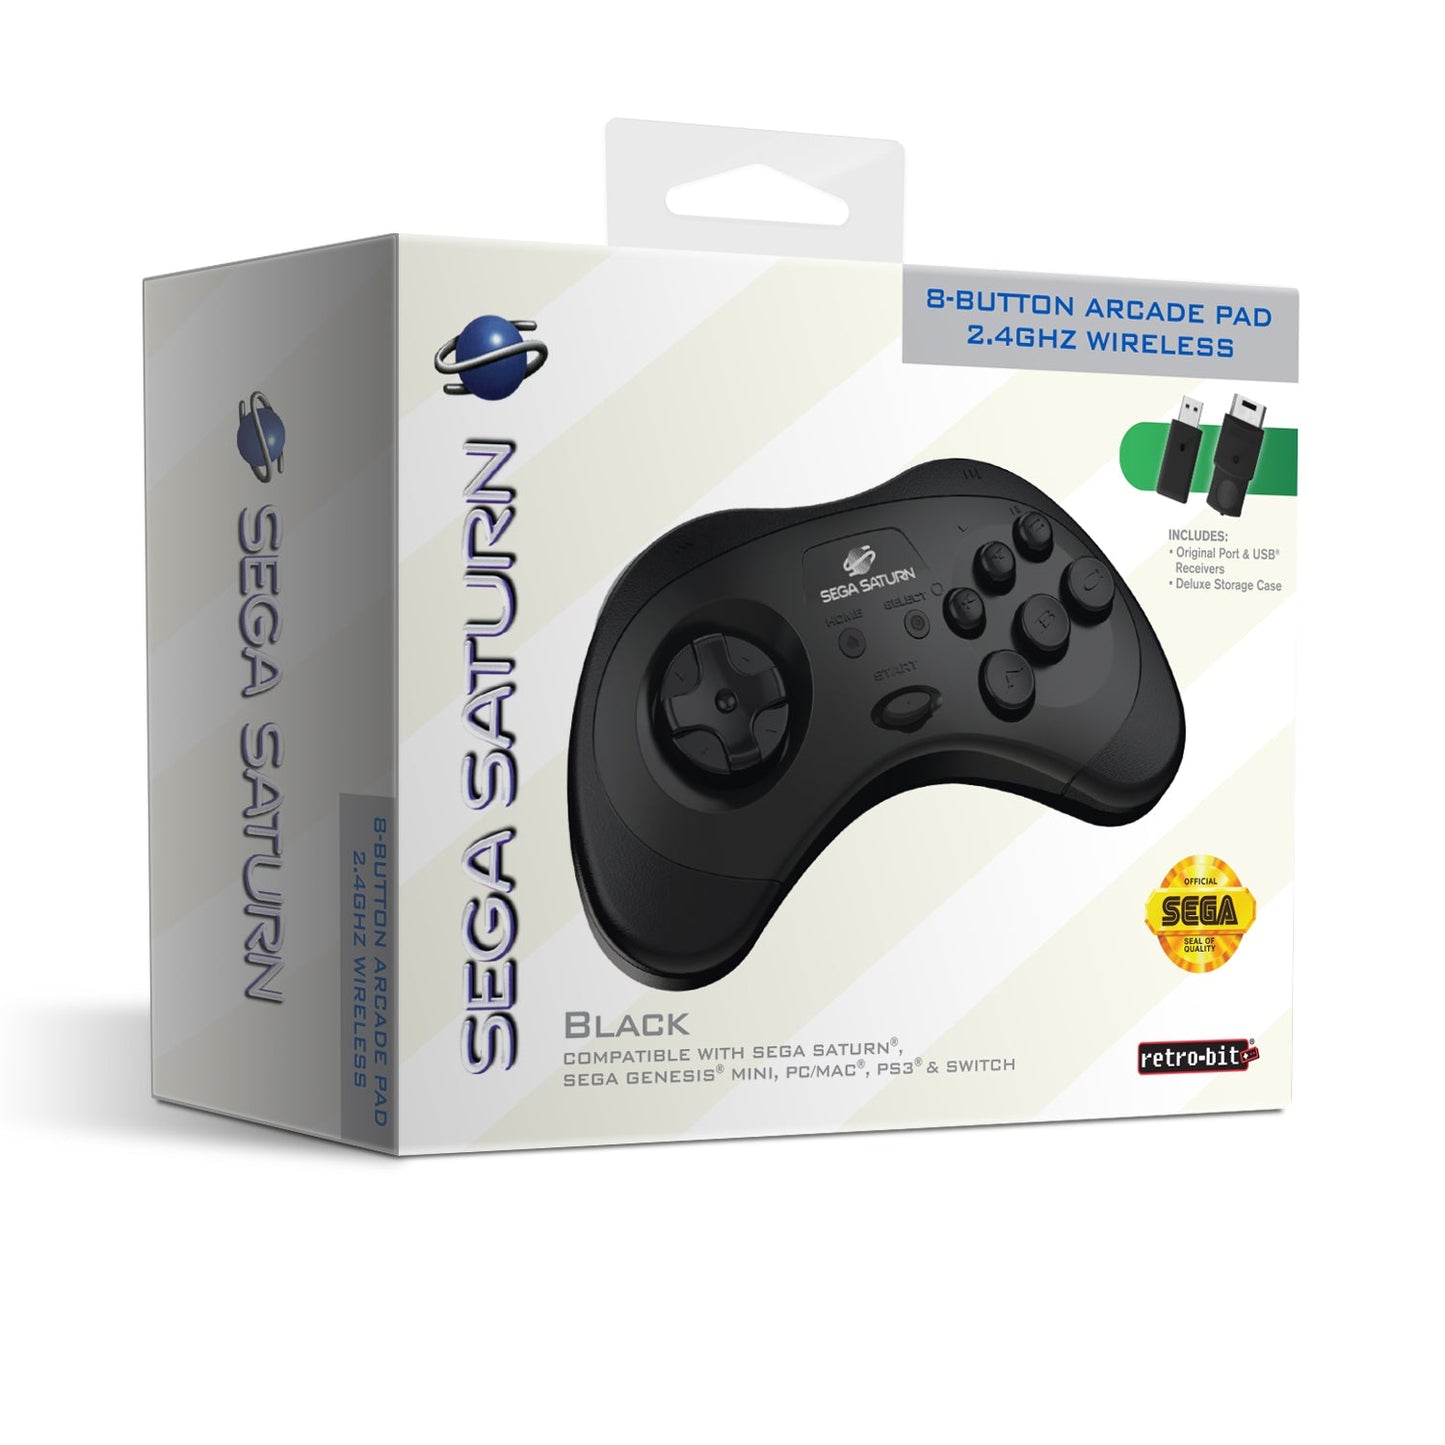 SEGA Saturn® 8-Button Arcade Pad - 2.4 GHz Wireless - Black - CastleMania Games